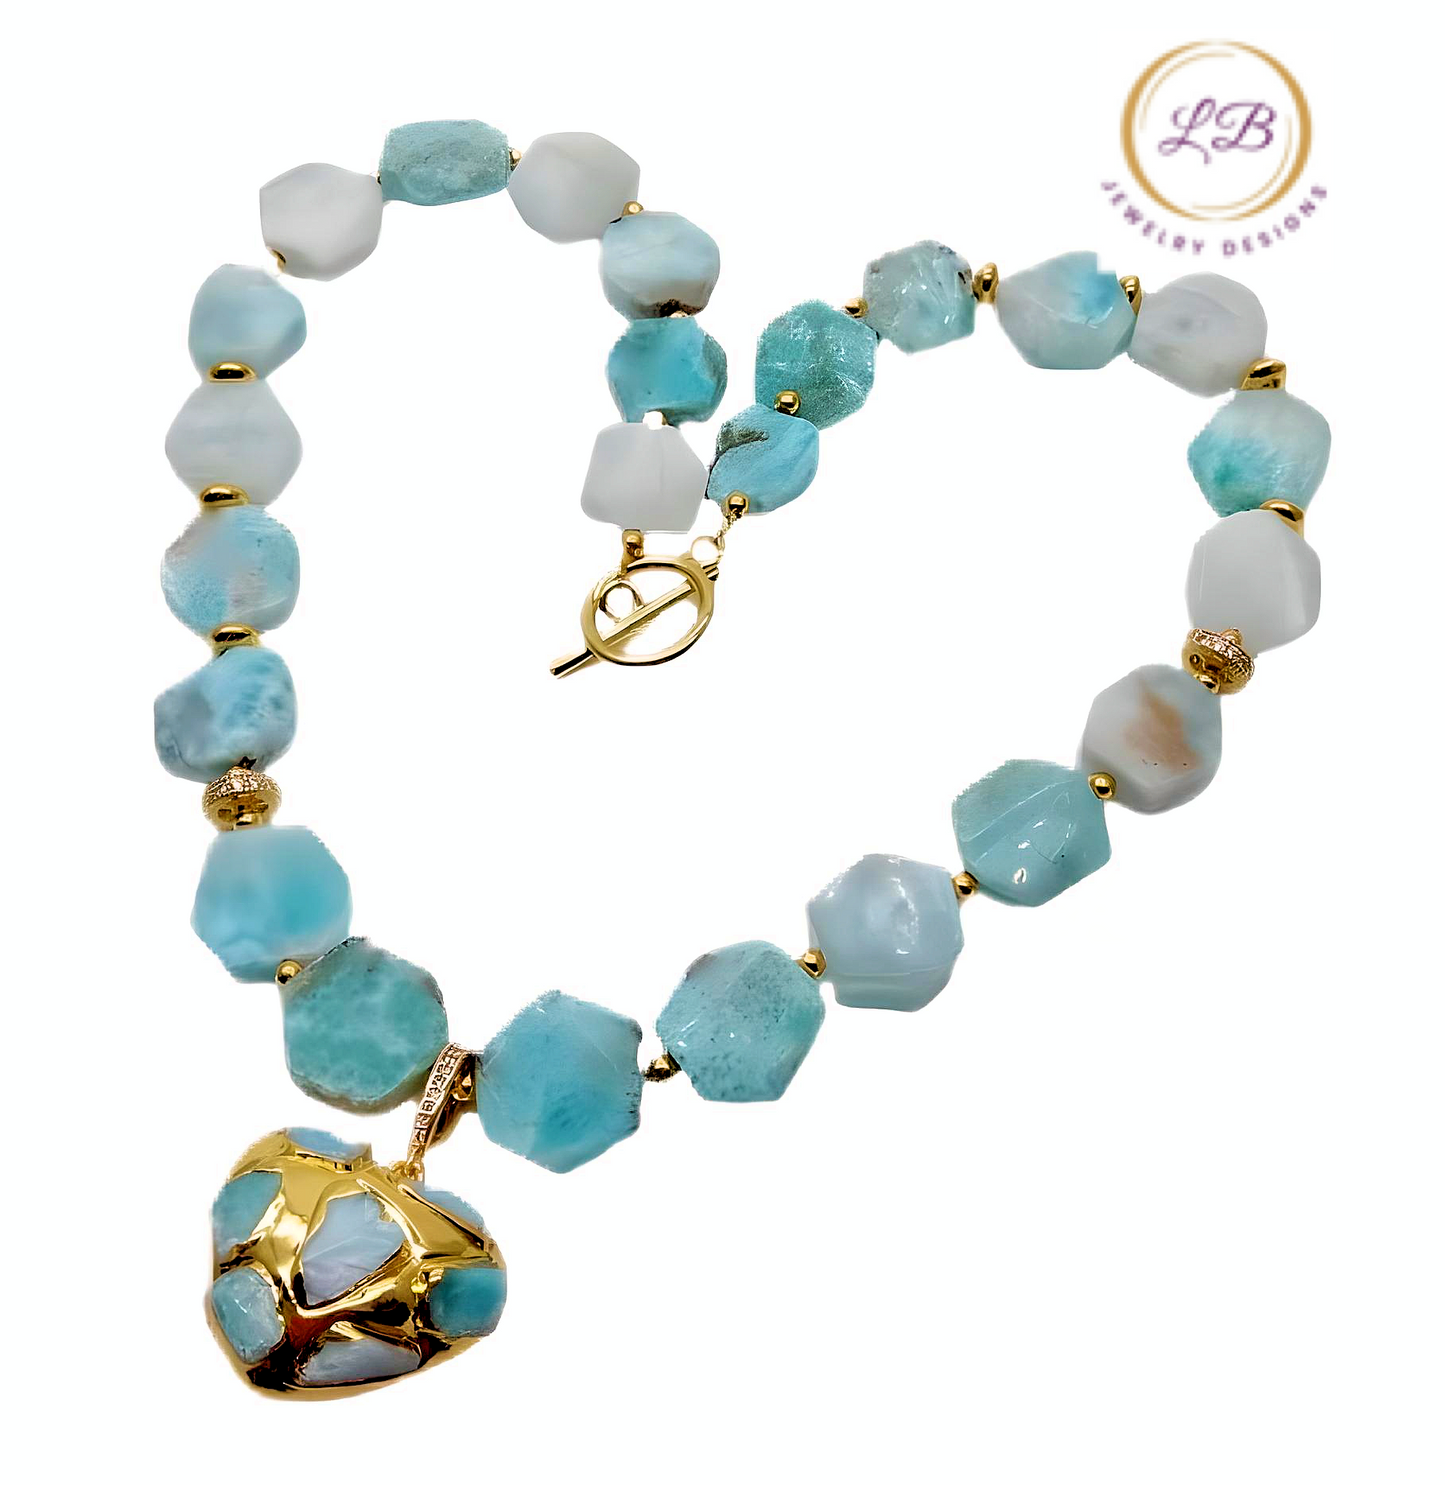 Caribbean Blue Larimar Gemstone Pendant Necklace 18"